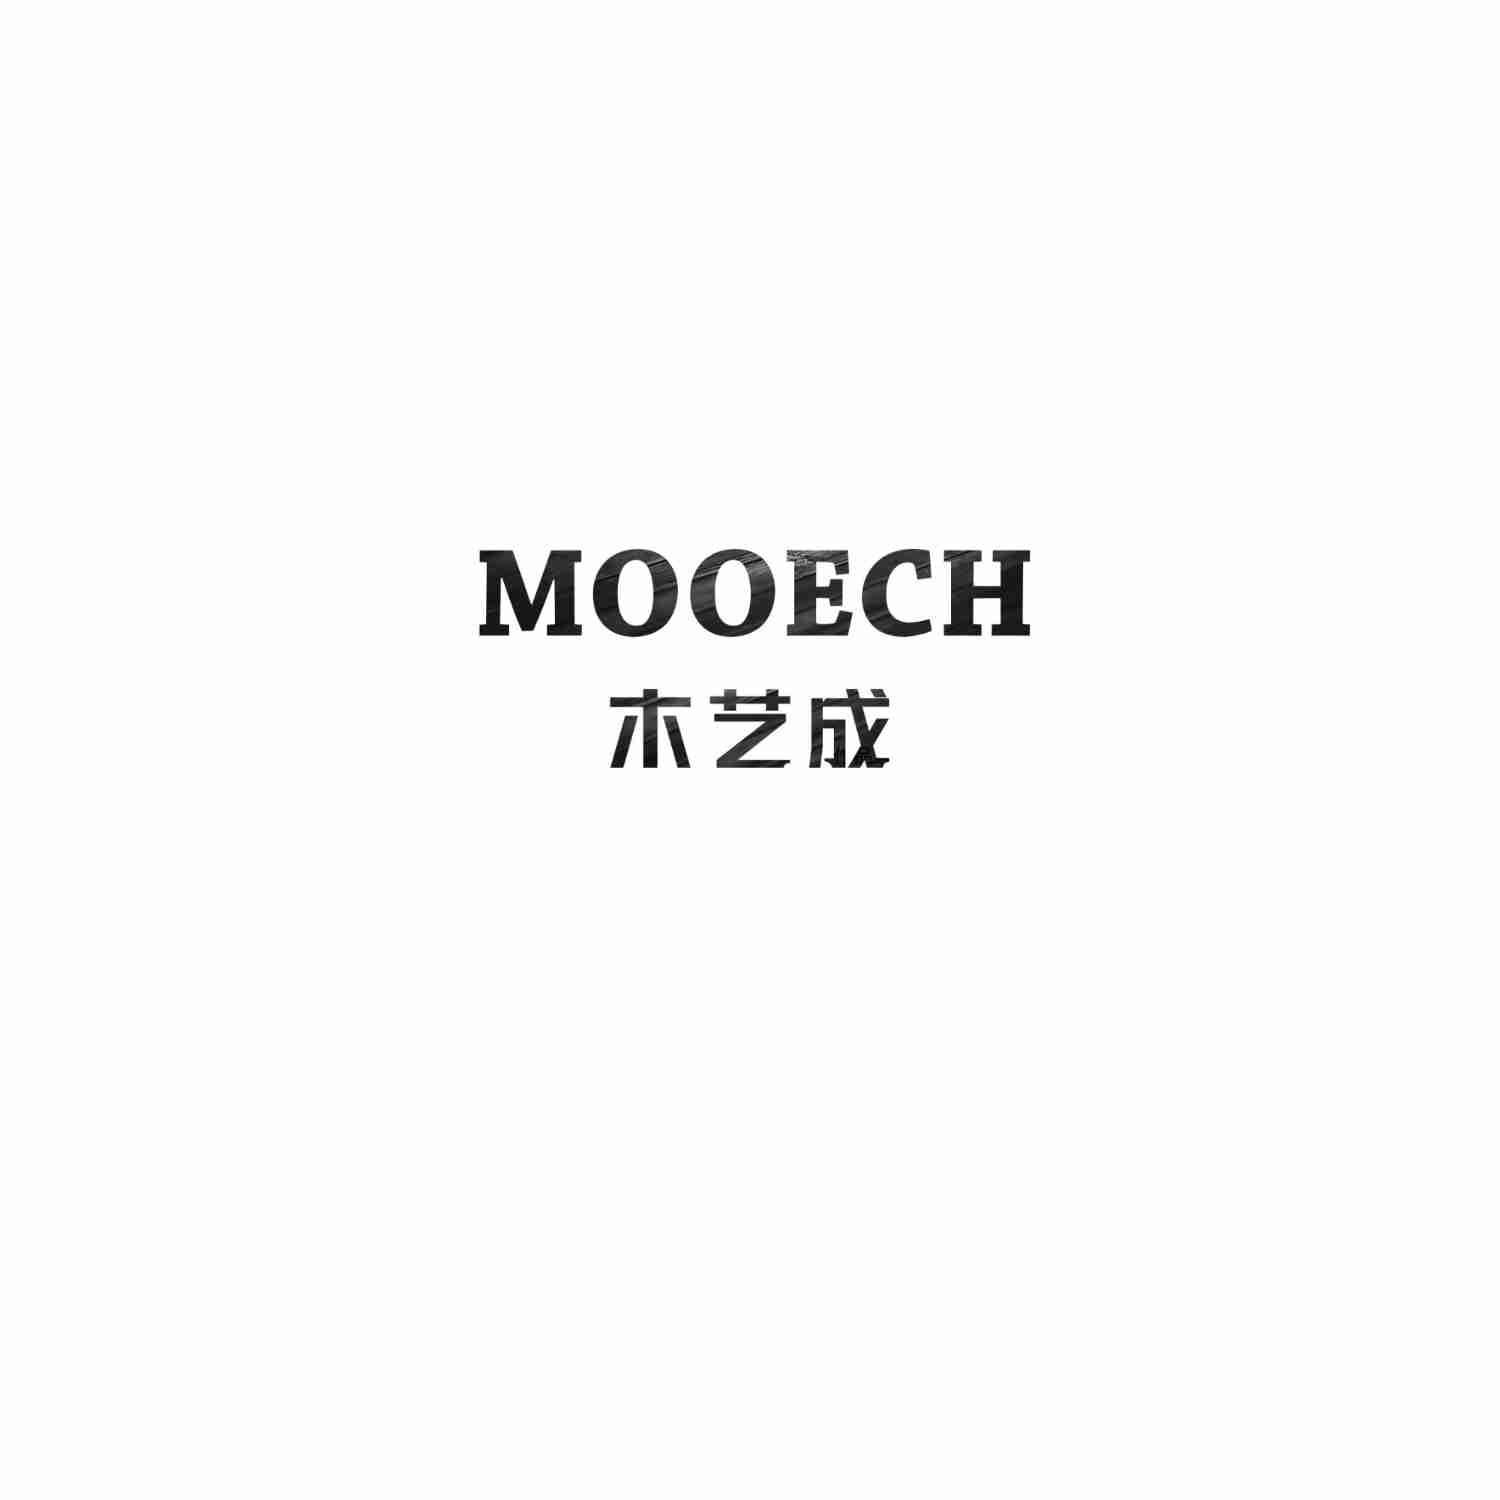 MOOECH 木艺成 商标公告